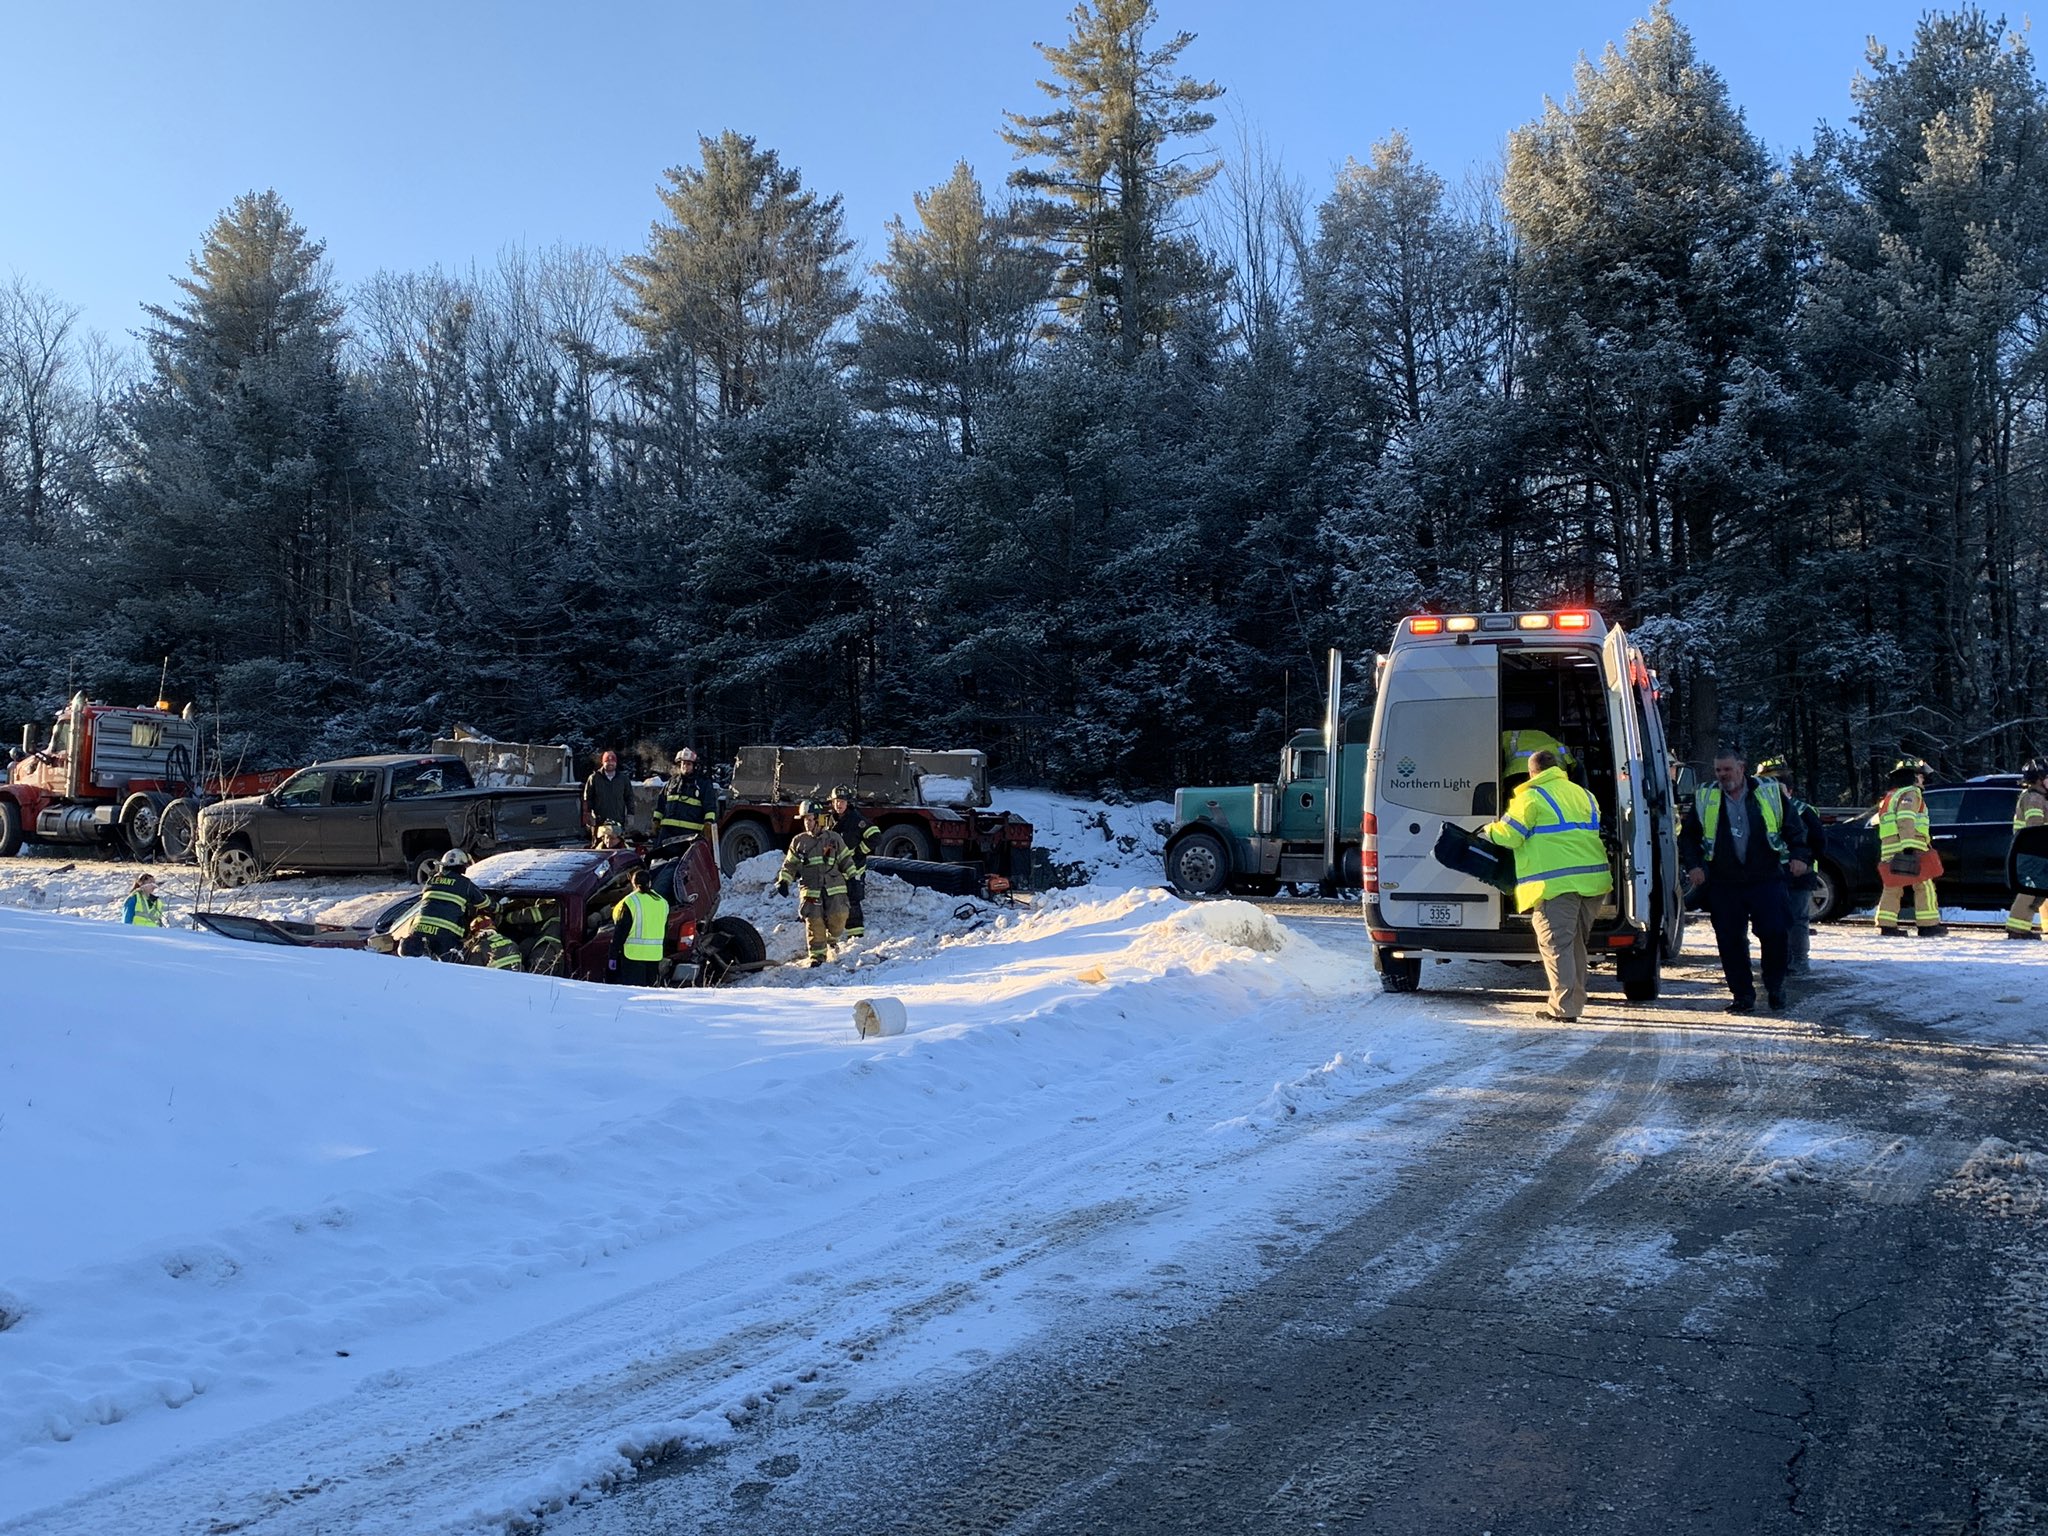 IMAGES Vehicles Damaged in Major Pileup Crash in Maine NBC Boston